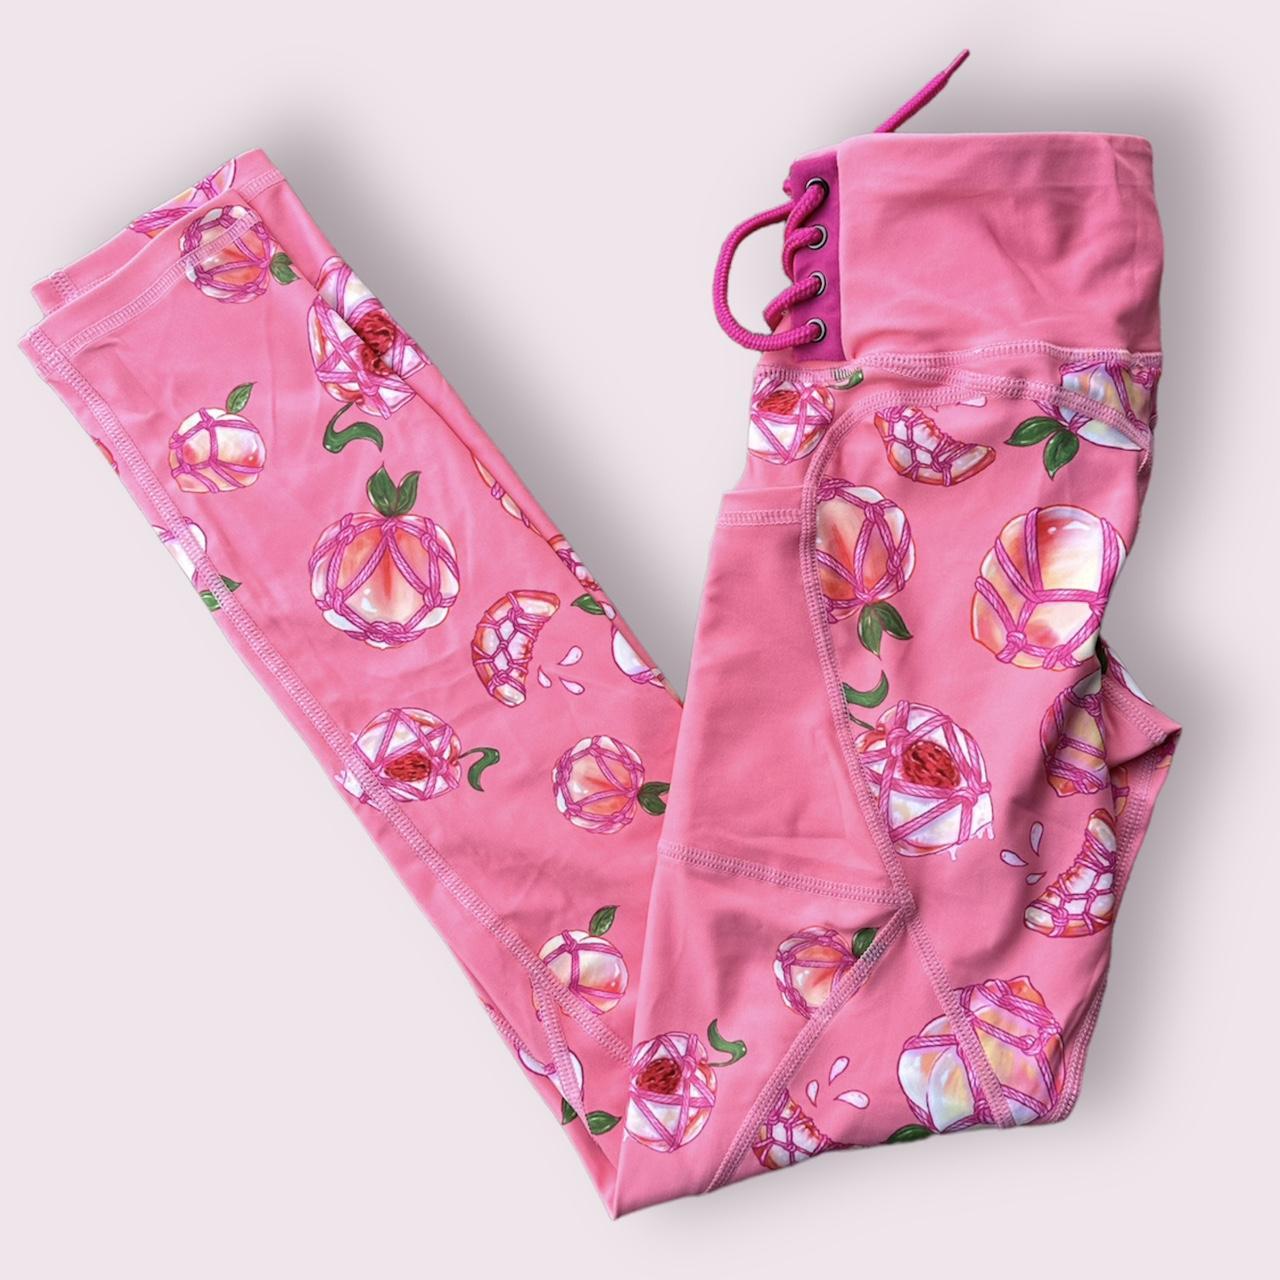 Hot Stuff Lace Top - Neon Pink | Plus size fashion for women, Korean plus  size fashion, Plus size tops